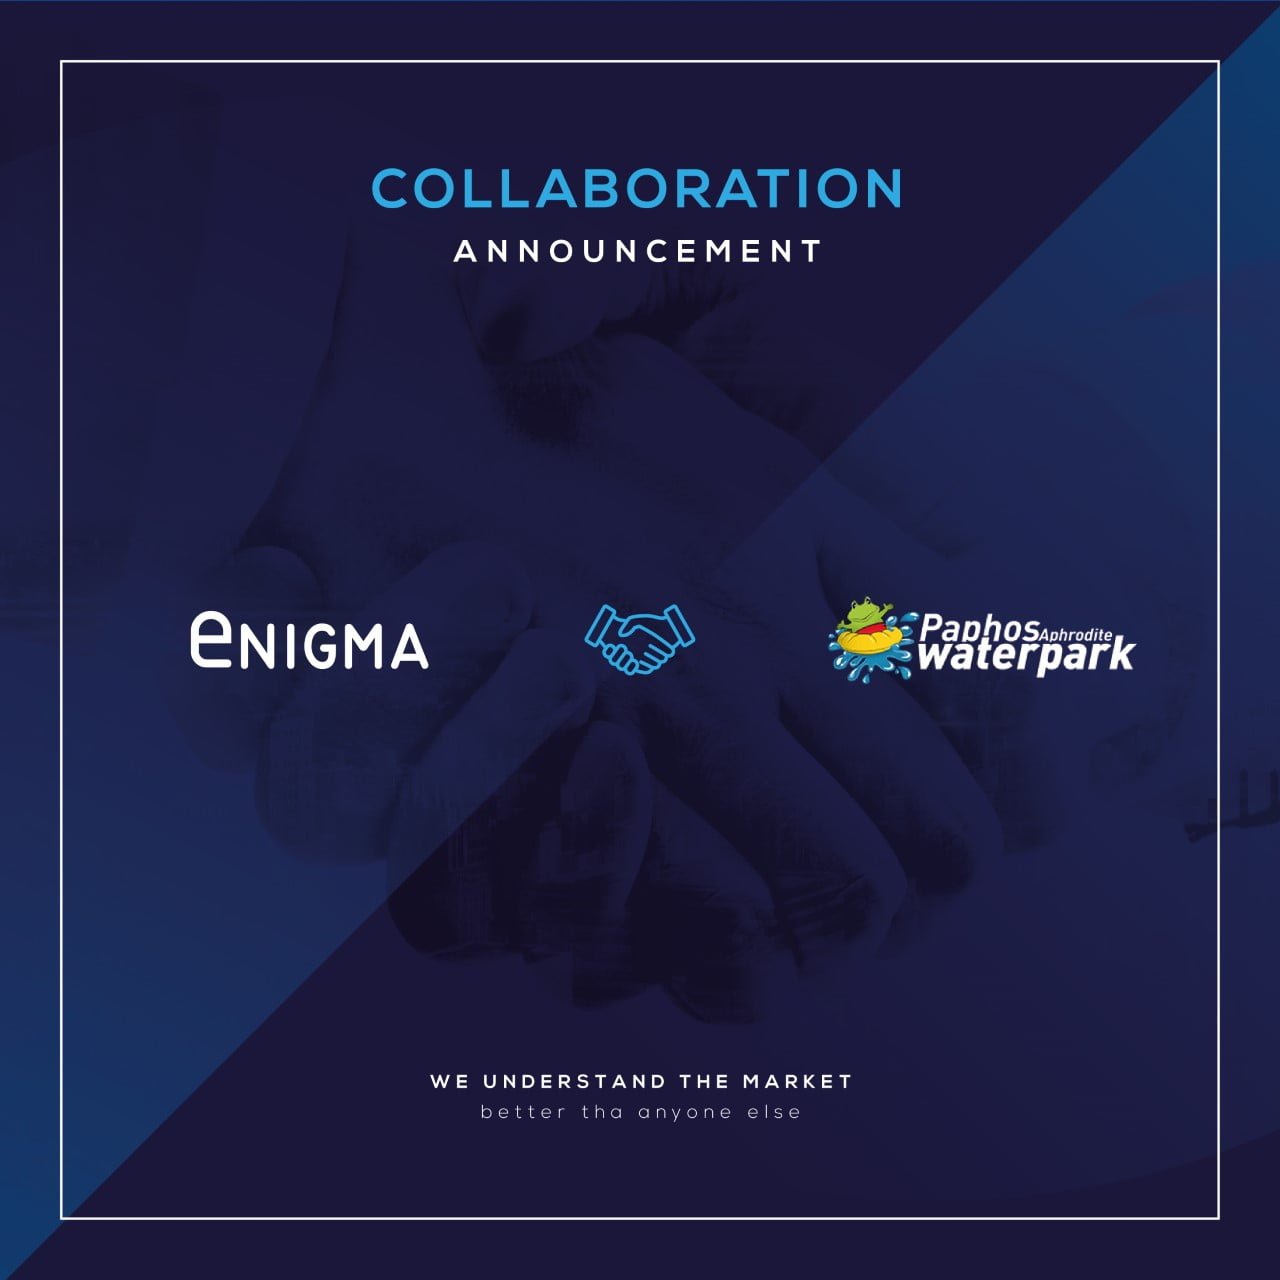 collaboration announcement design